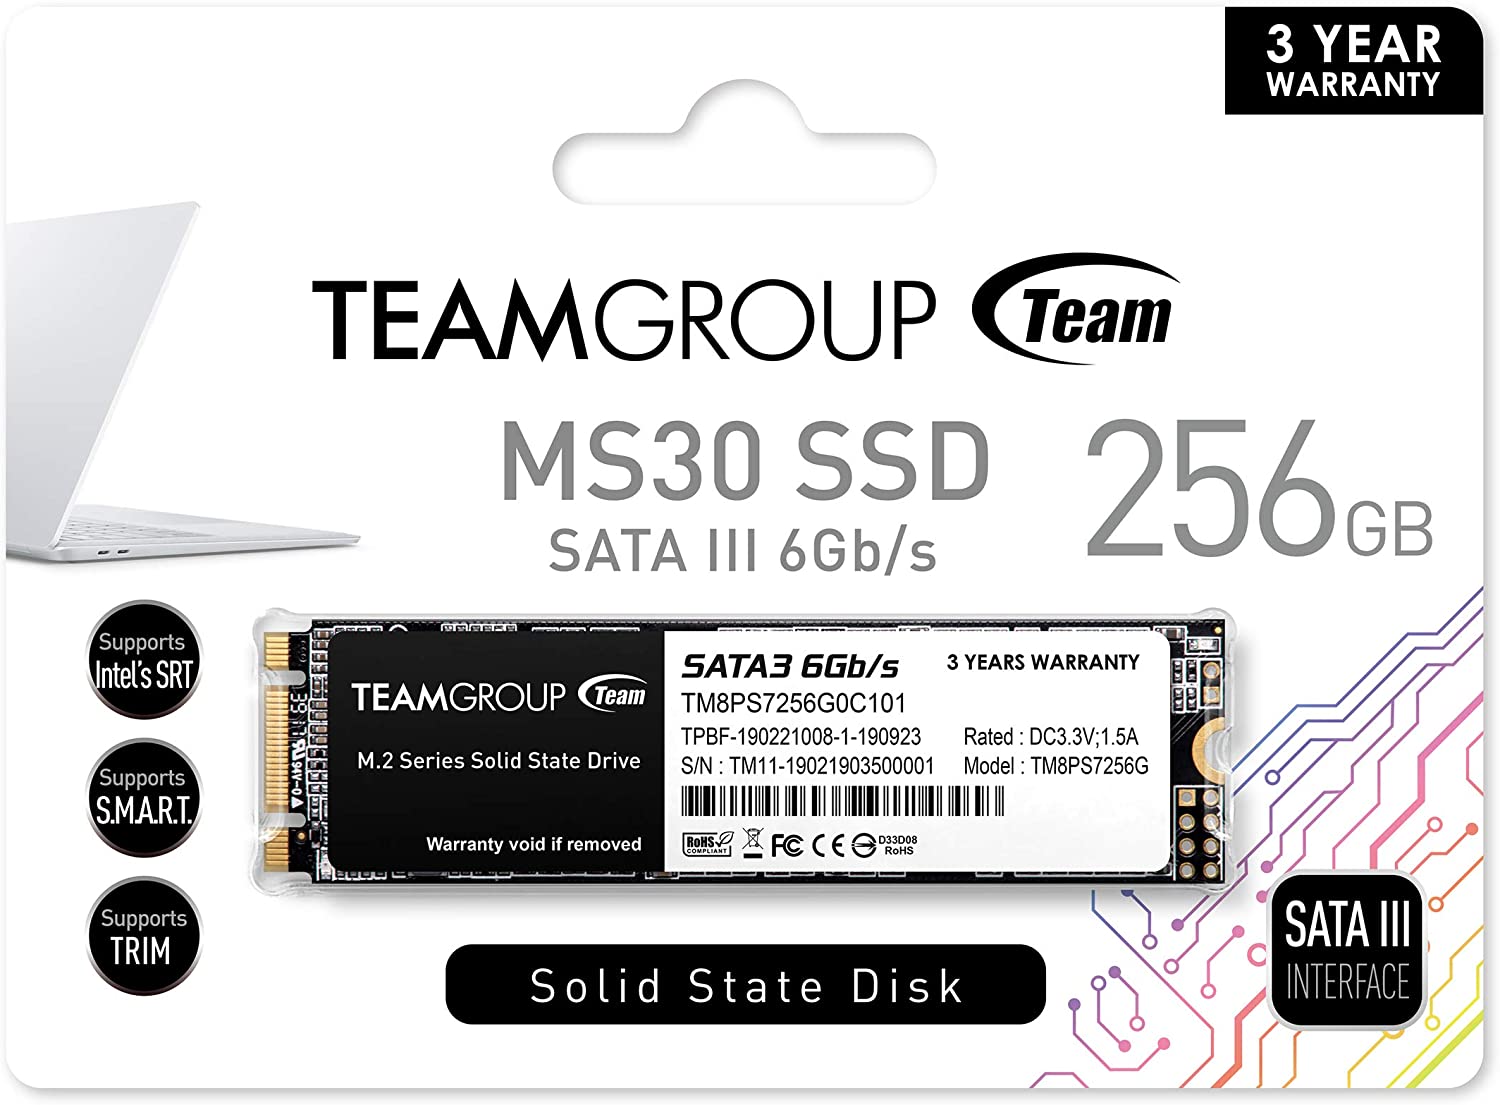 M.2 SATA SSD 256GB Team Group MS30